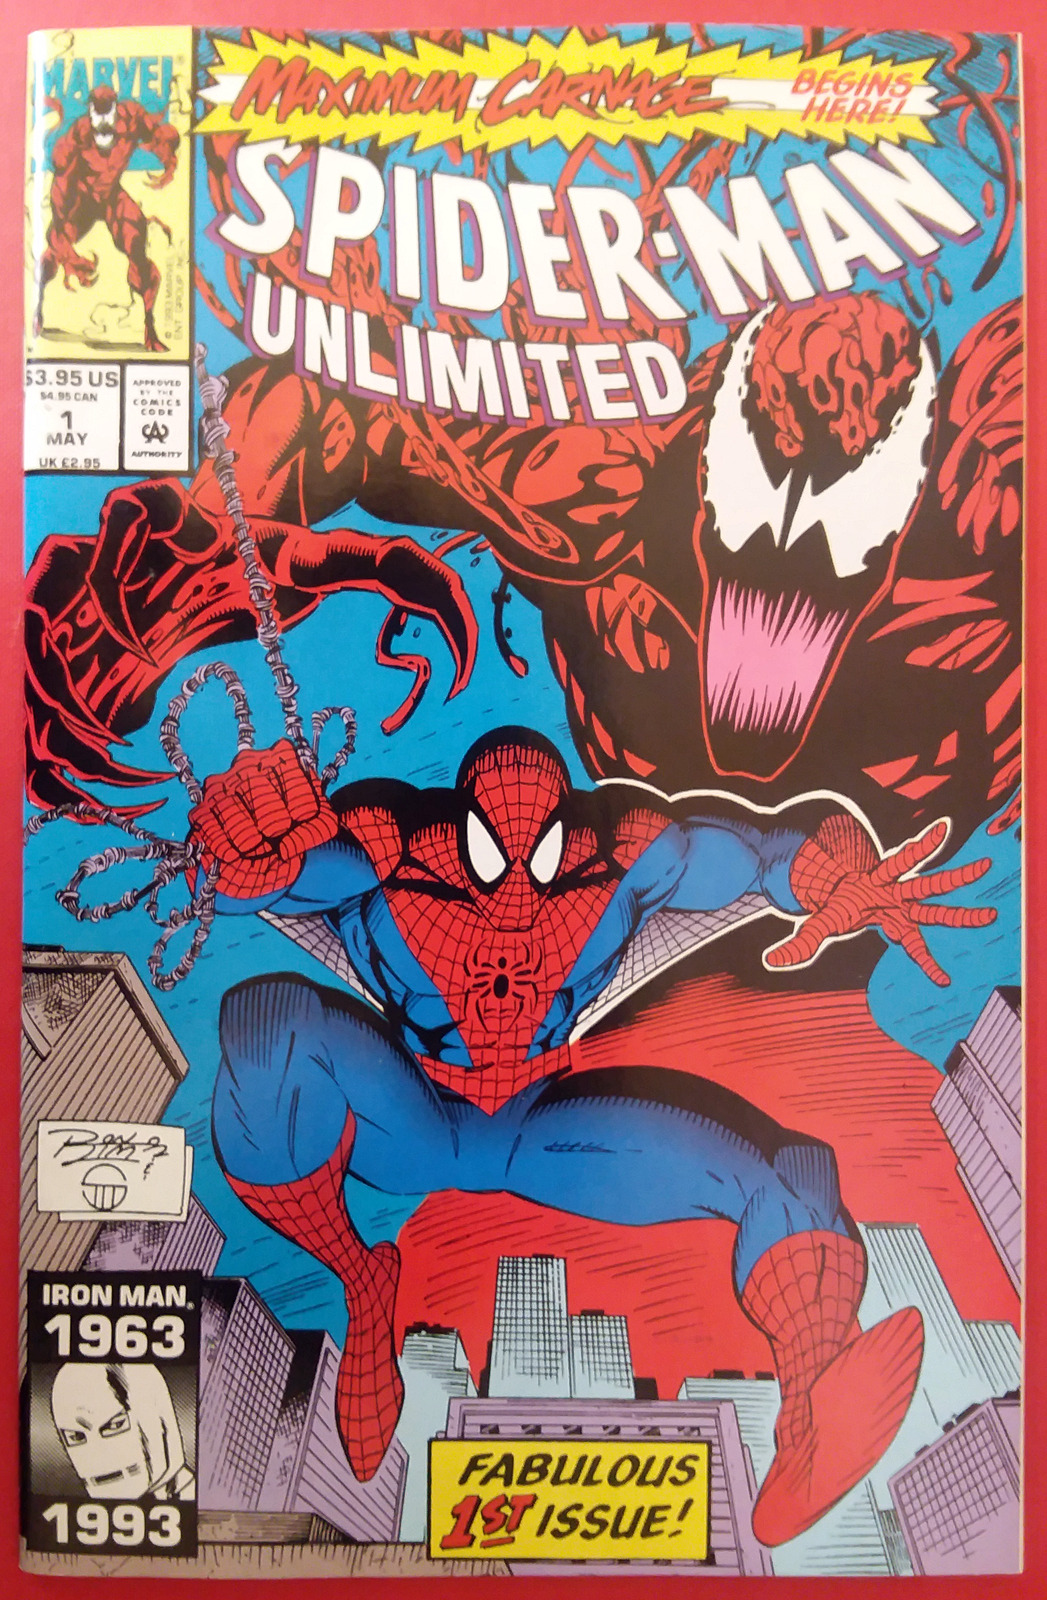 ✦ Spider-Man Unlimited #1 (1993, Marvel) VF/NM 1st App Shriek Maximum Carnage